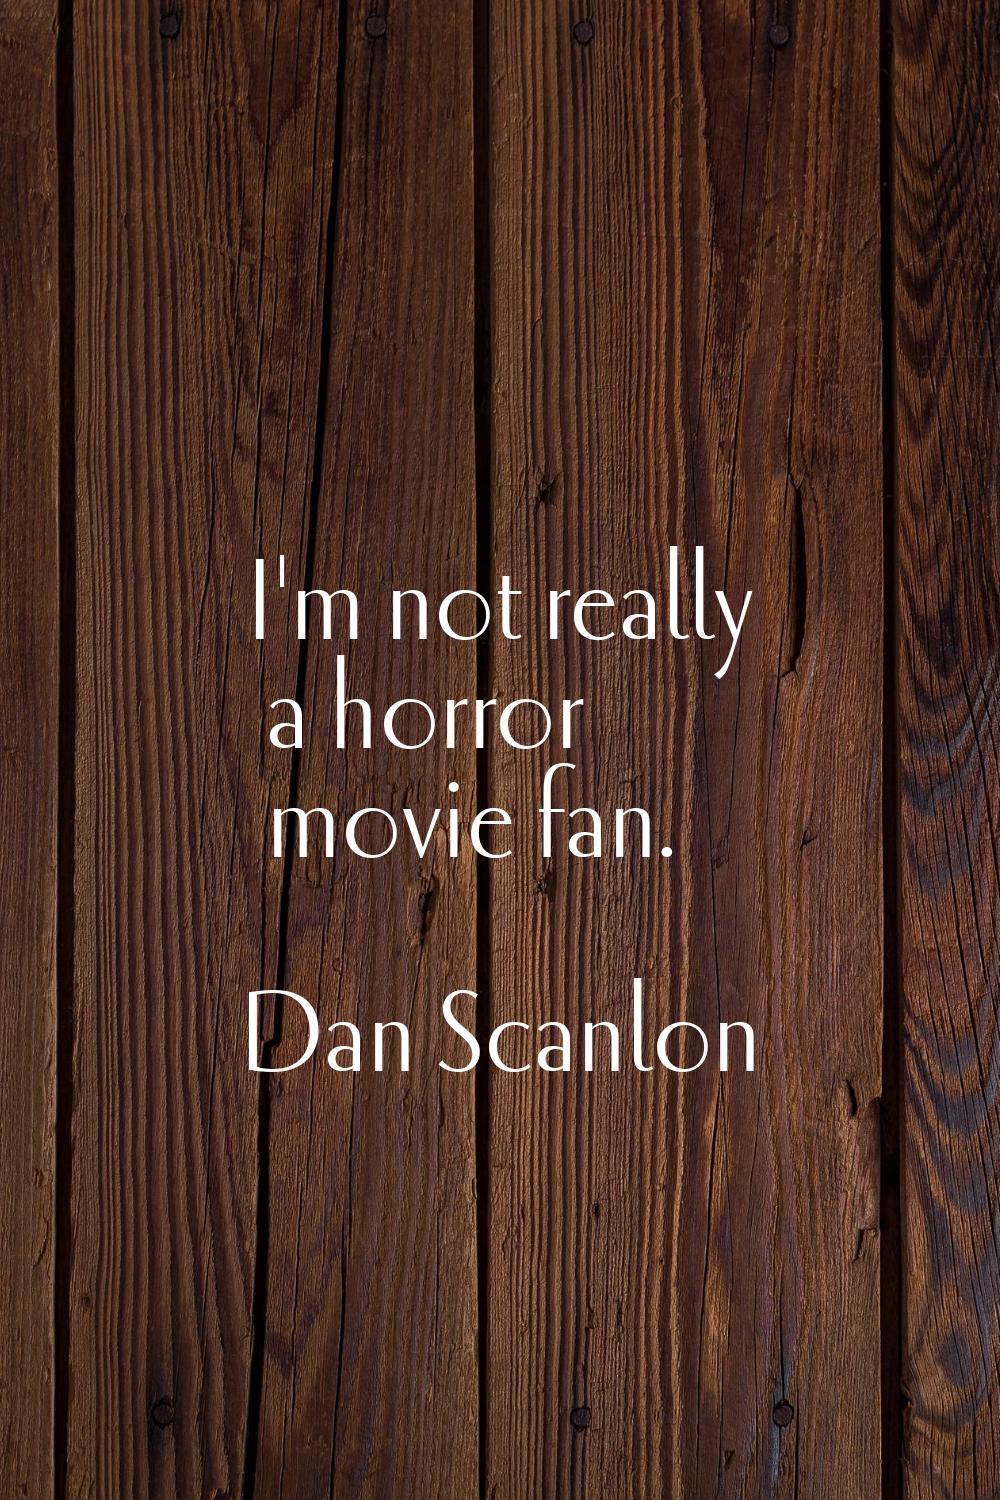 I'm not really a horror movie fan.